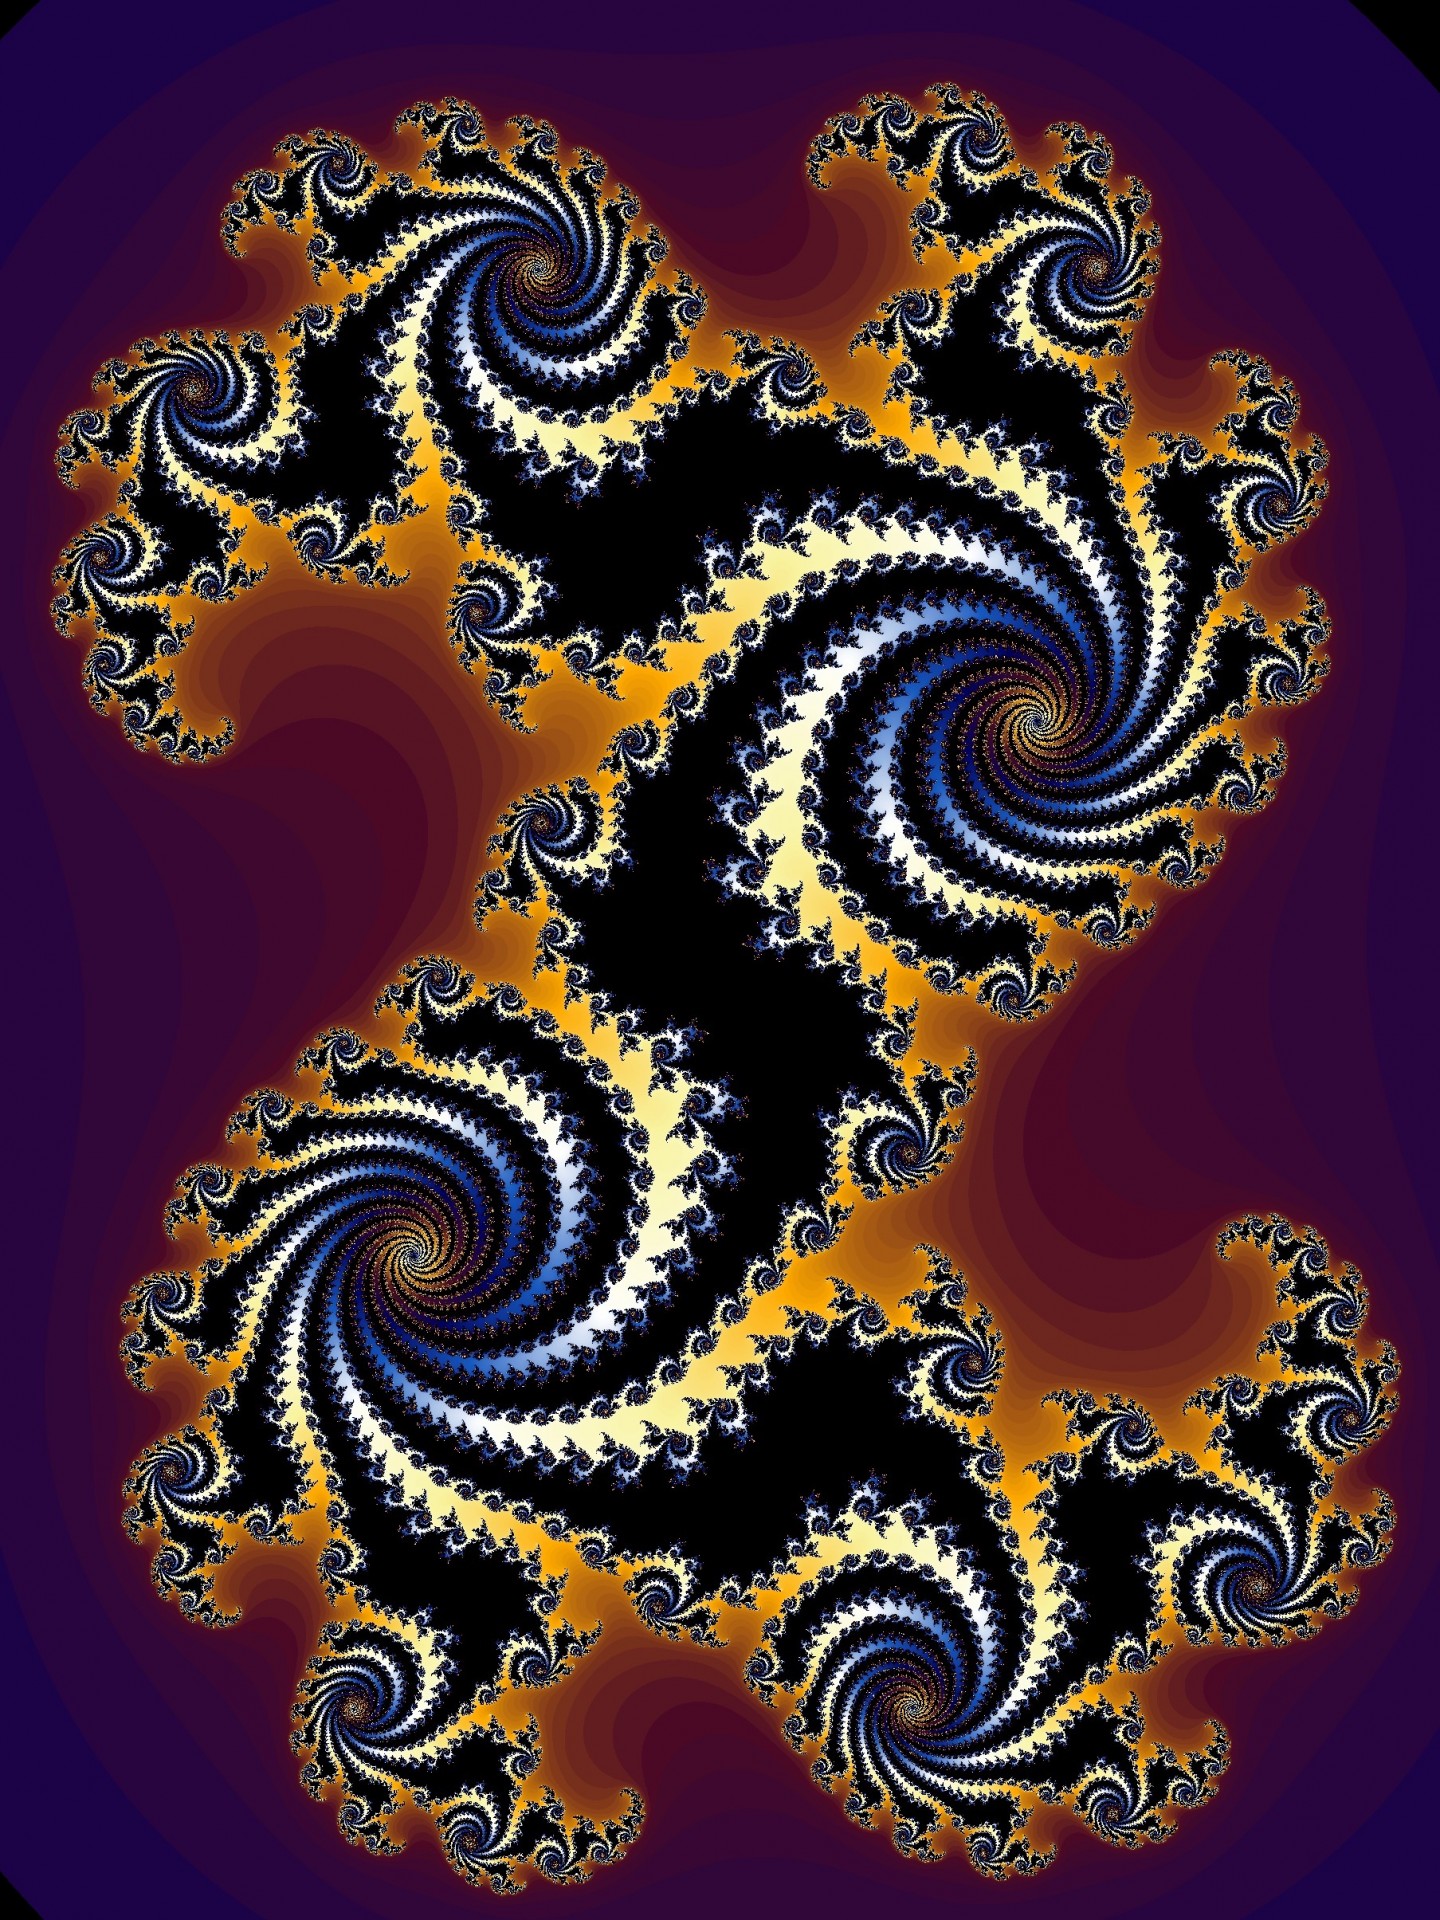 astronira fractal pattern free photo